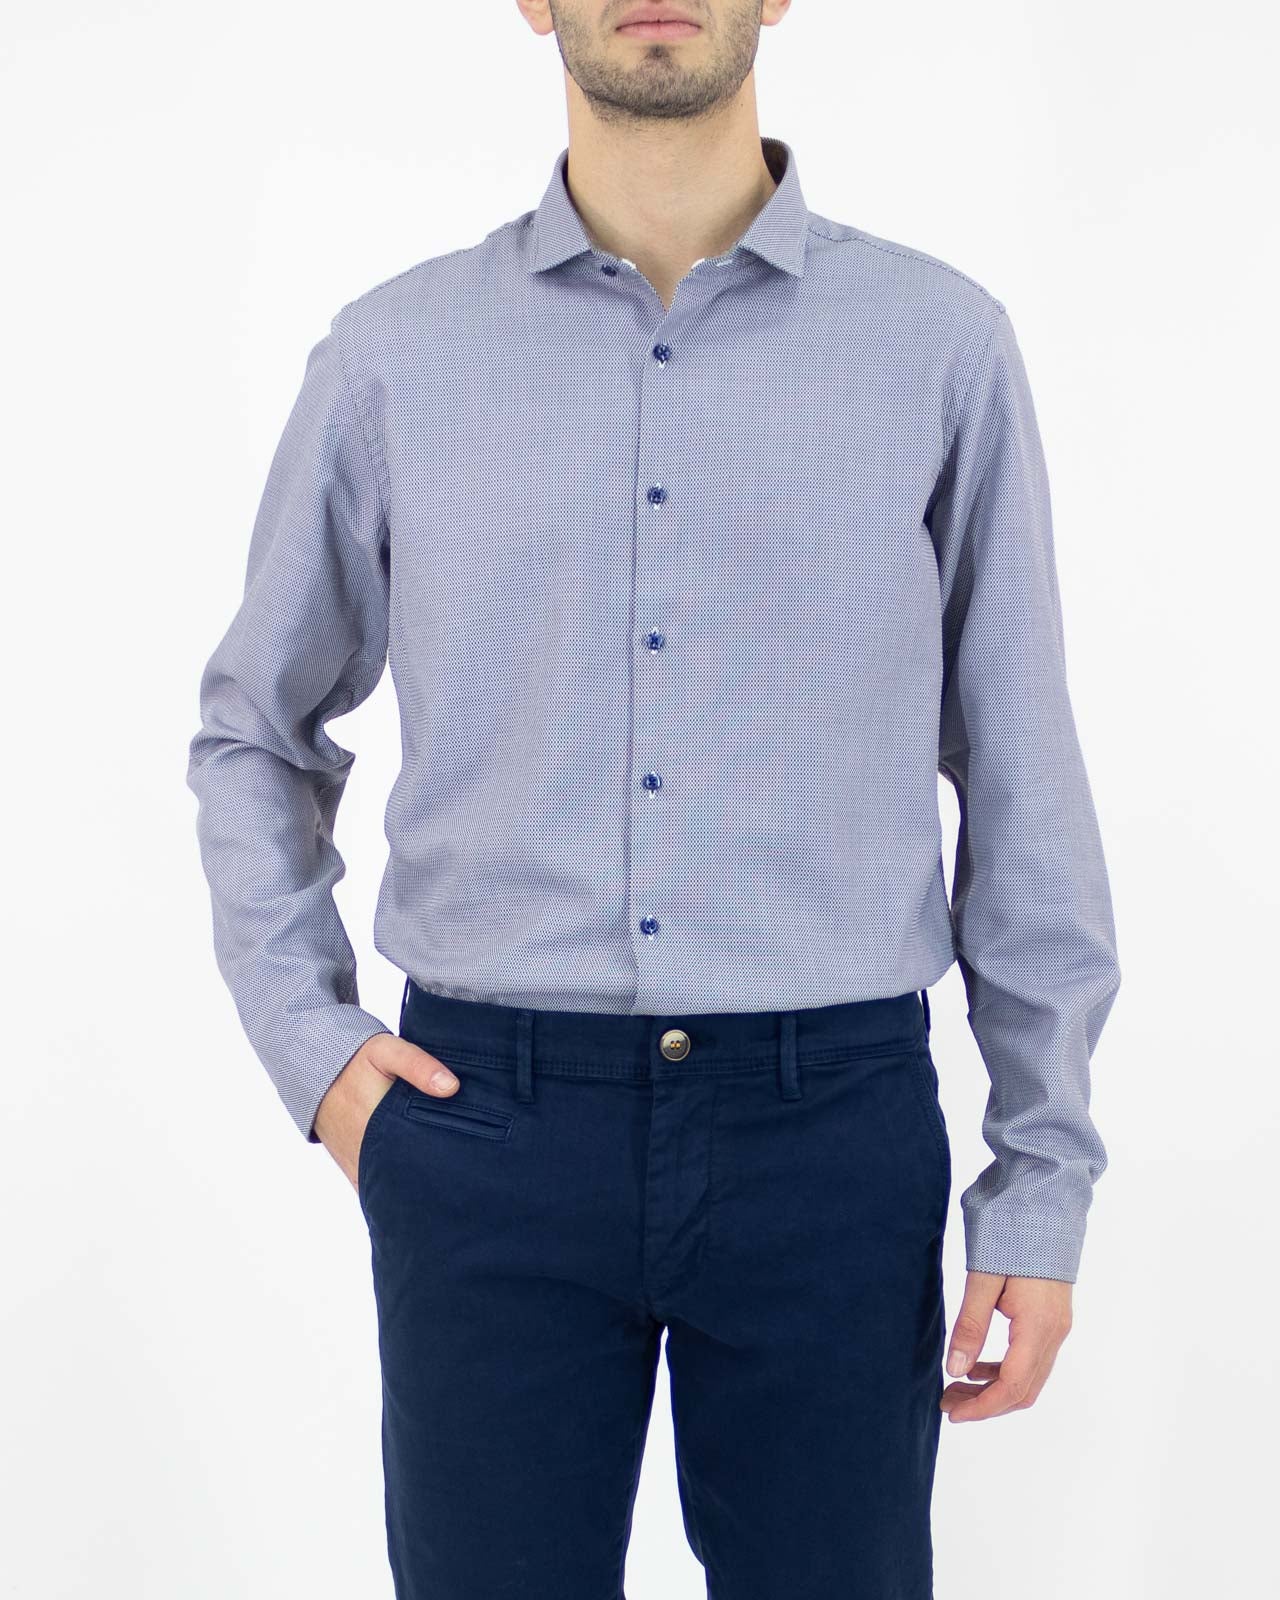 Micro-patterned cotton shirt